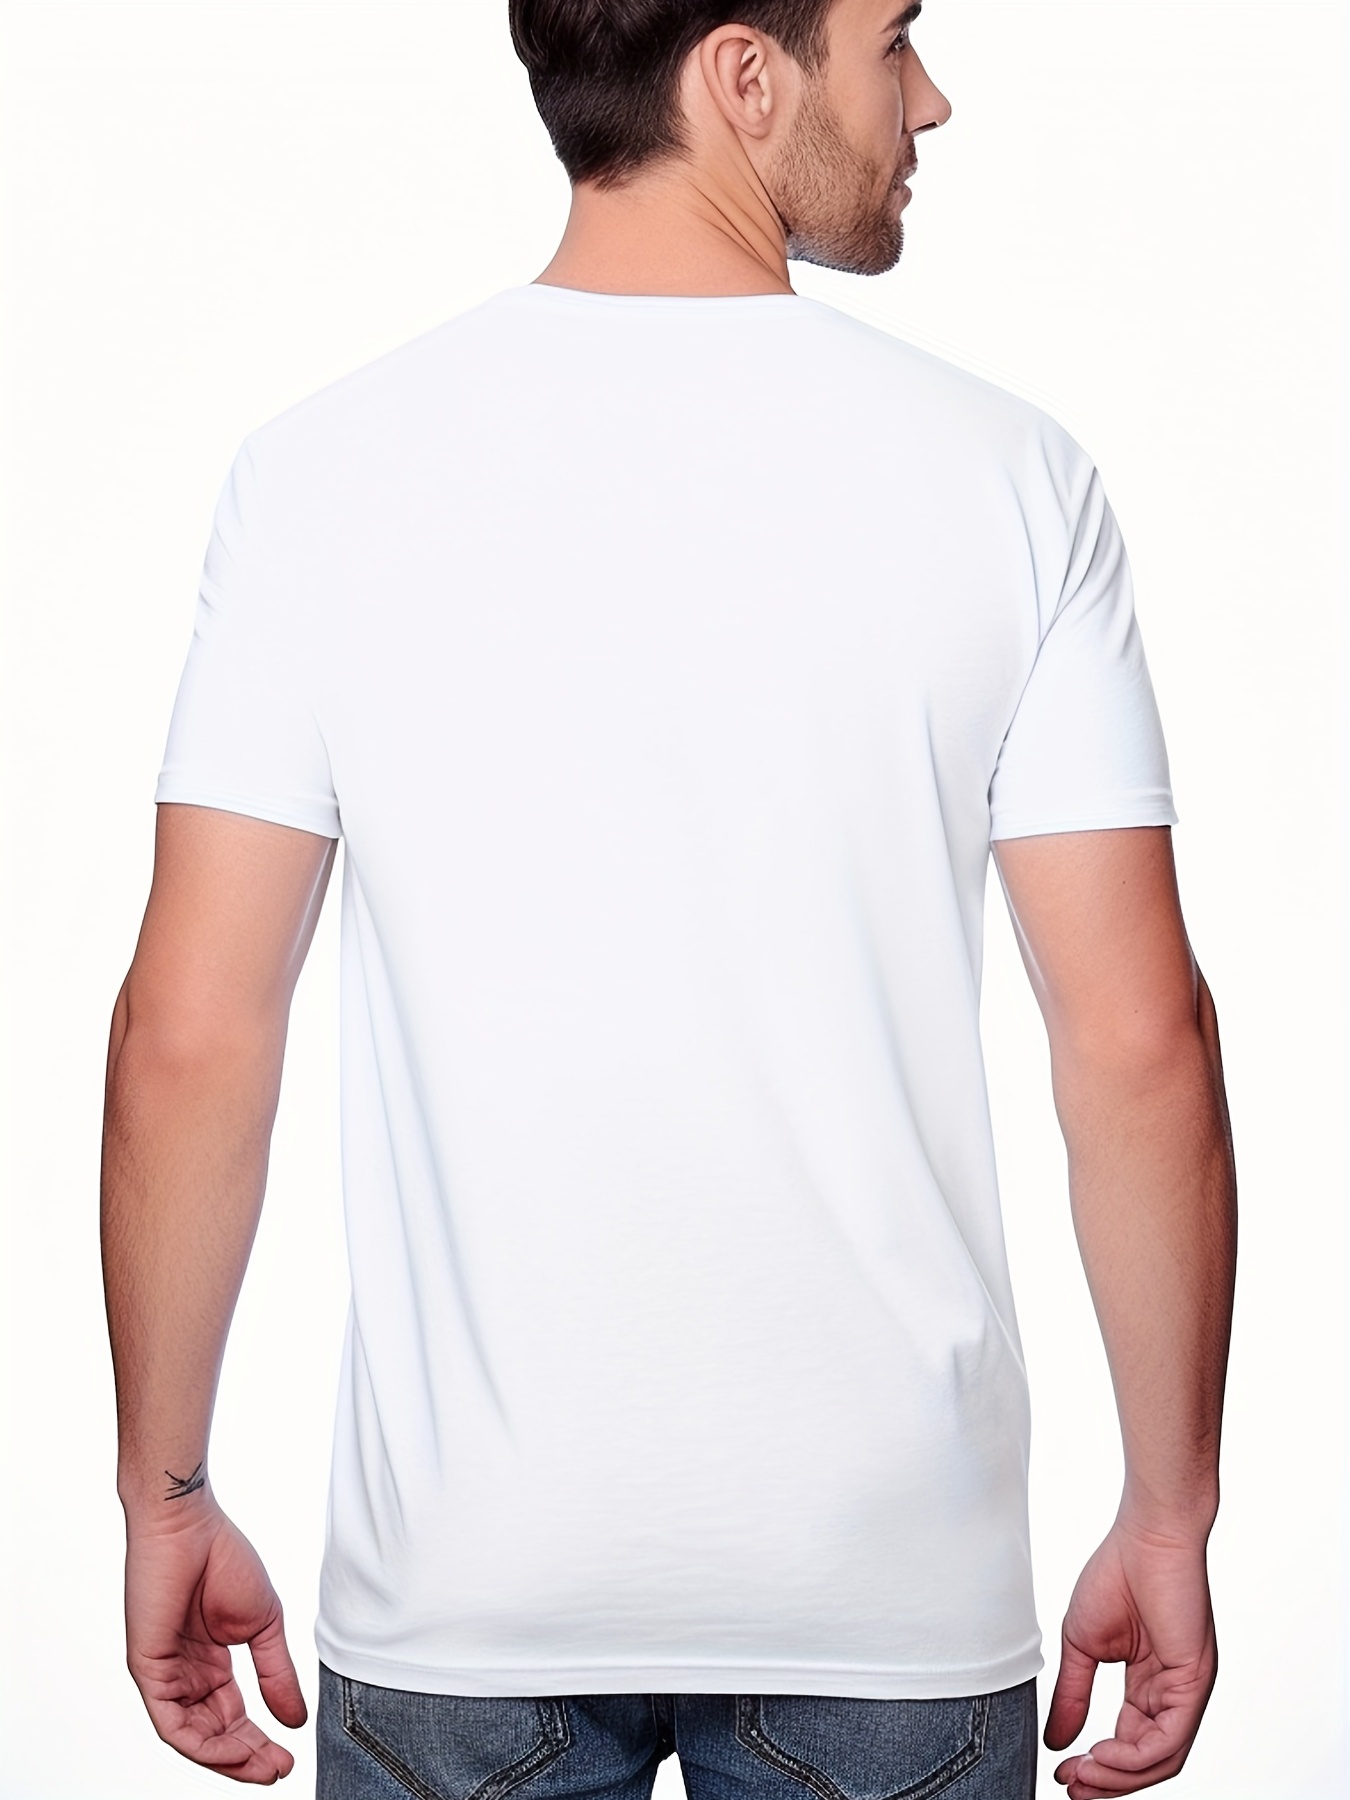 Men Shirts Casual Mens White T Shirts Short Sleeve Blouses for Men